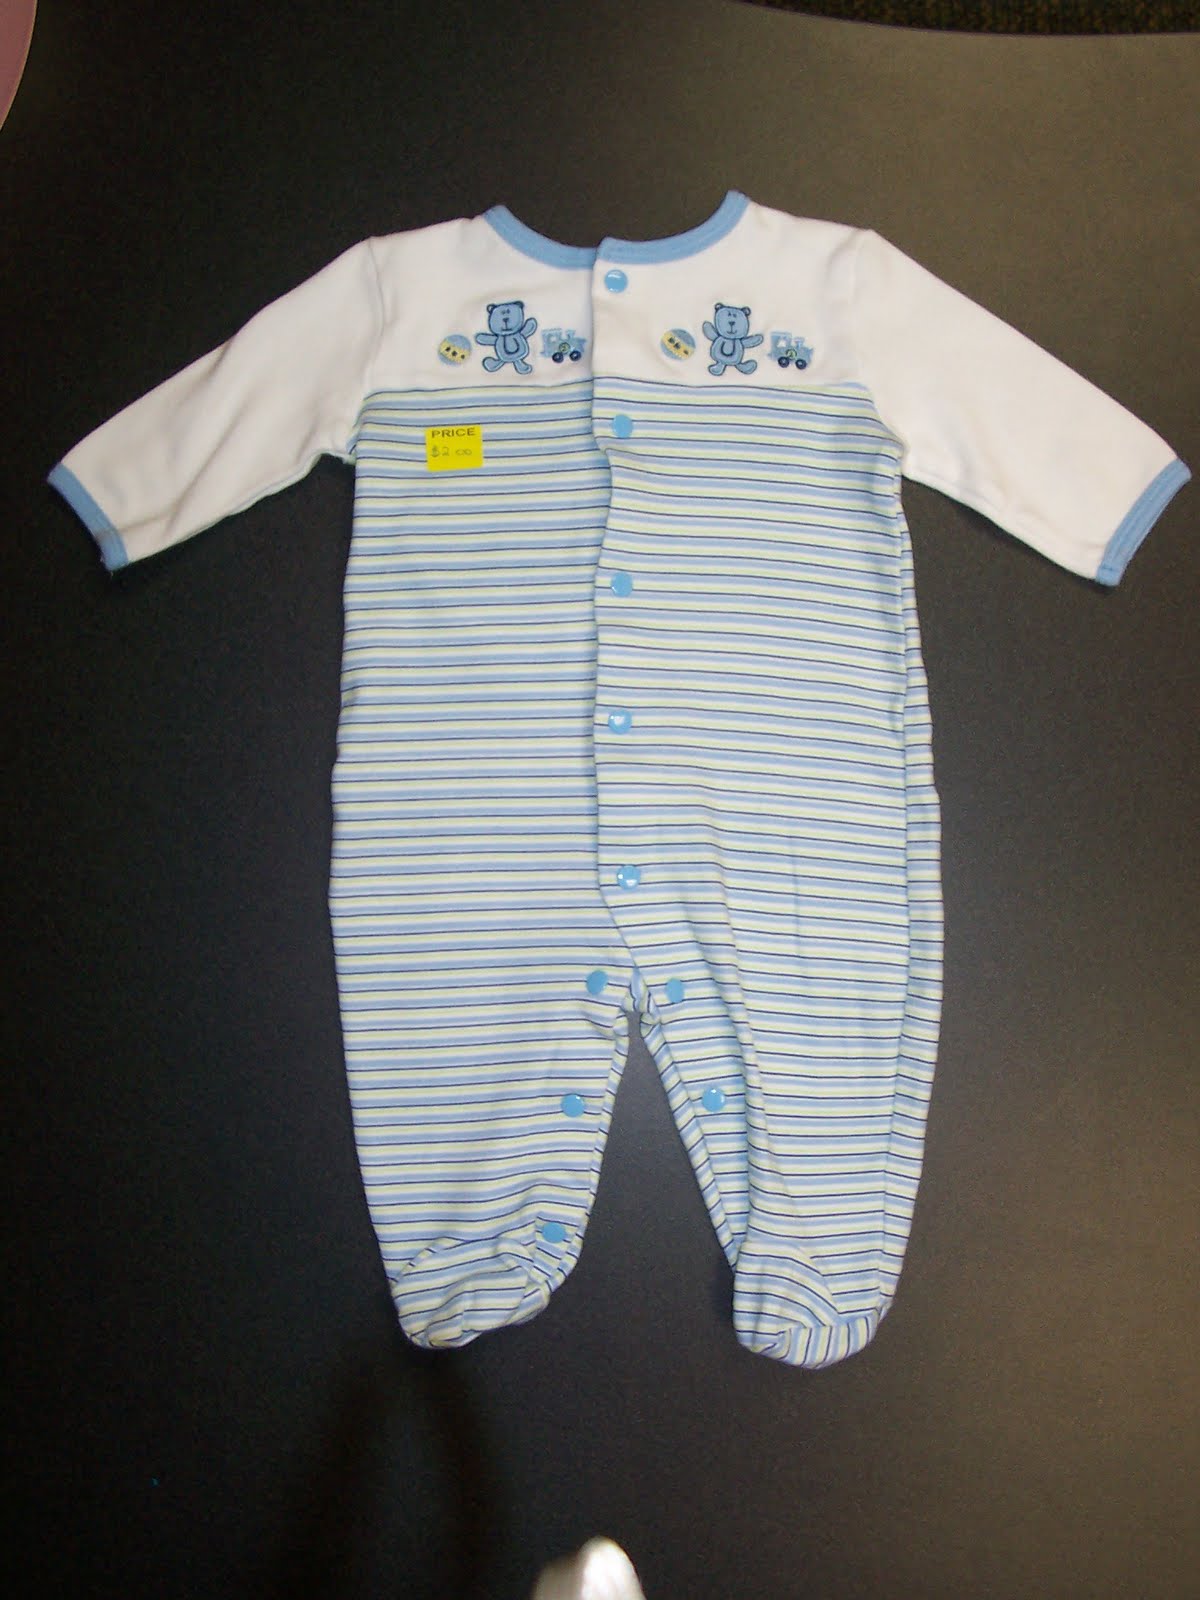 rodslist: Infant boy's sleeper (size S) - $2